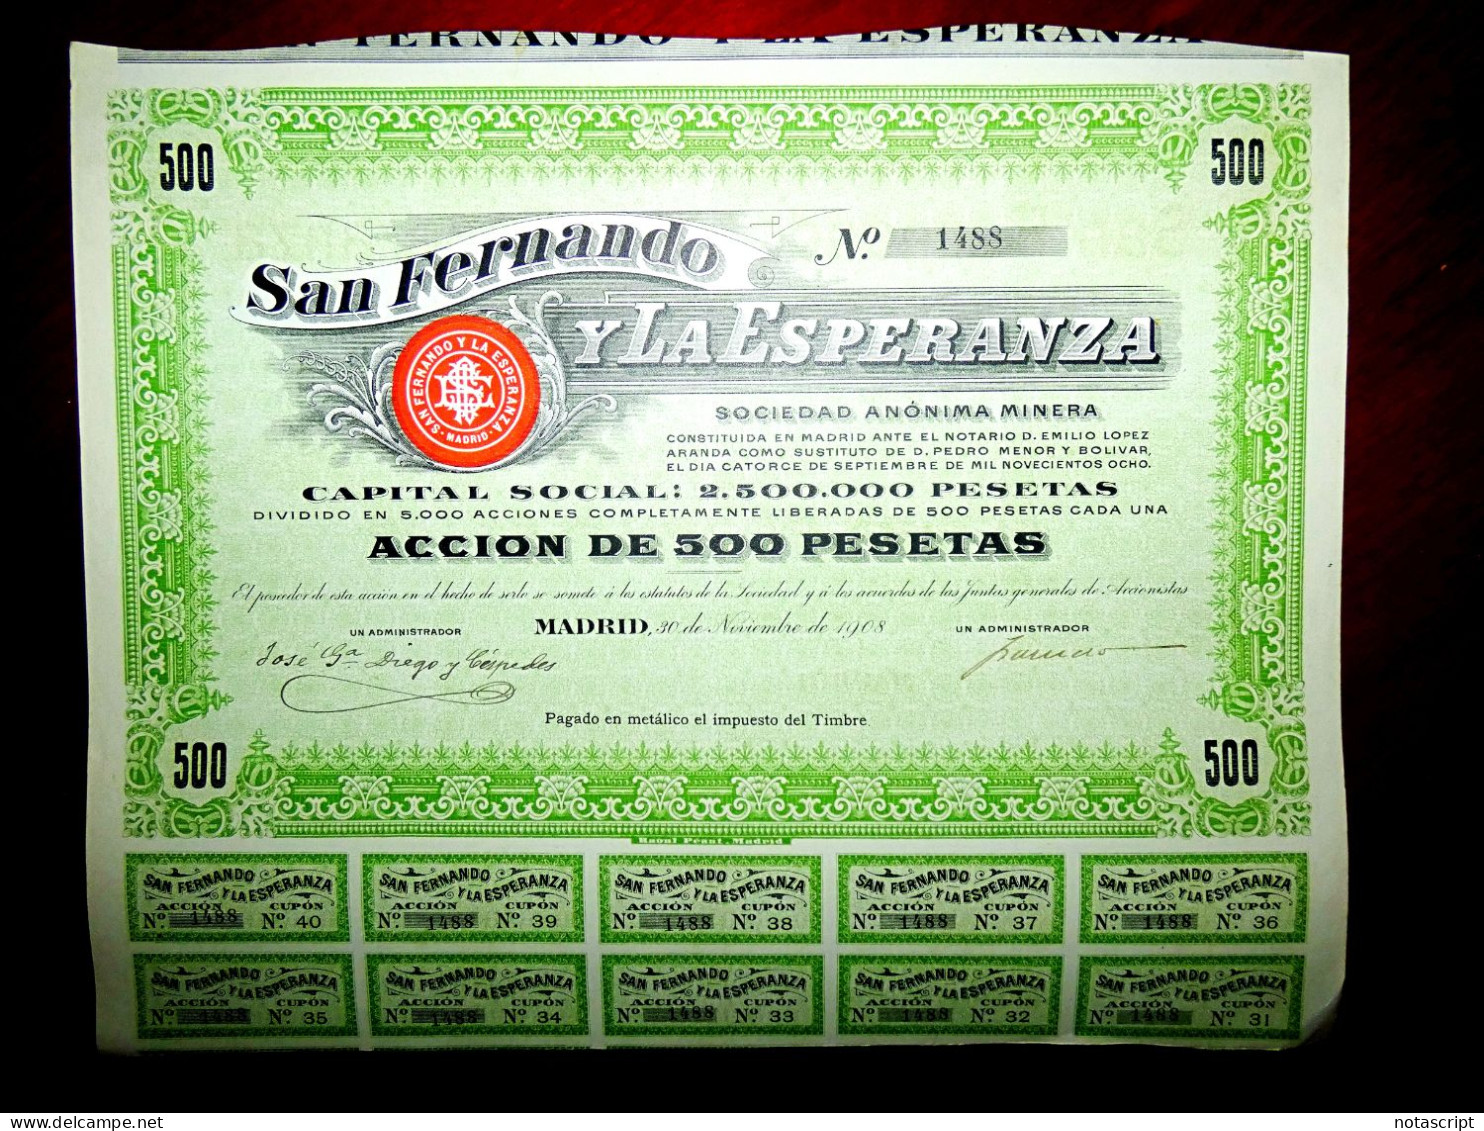 San Fernando Y La Esperanza ,Madrid 1908, Mines, Share Certificate - Mines